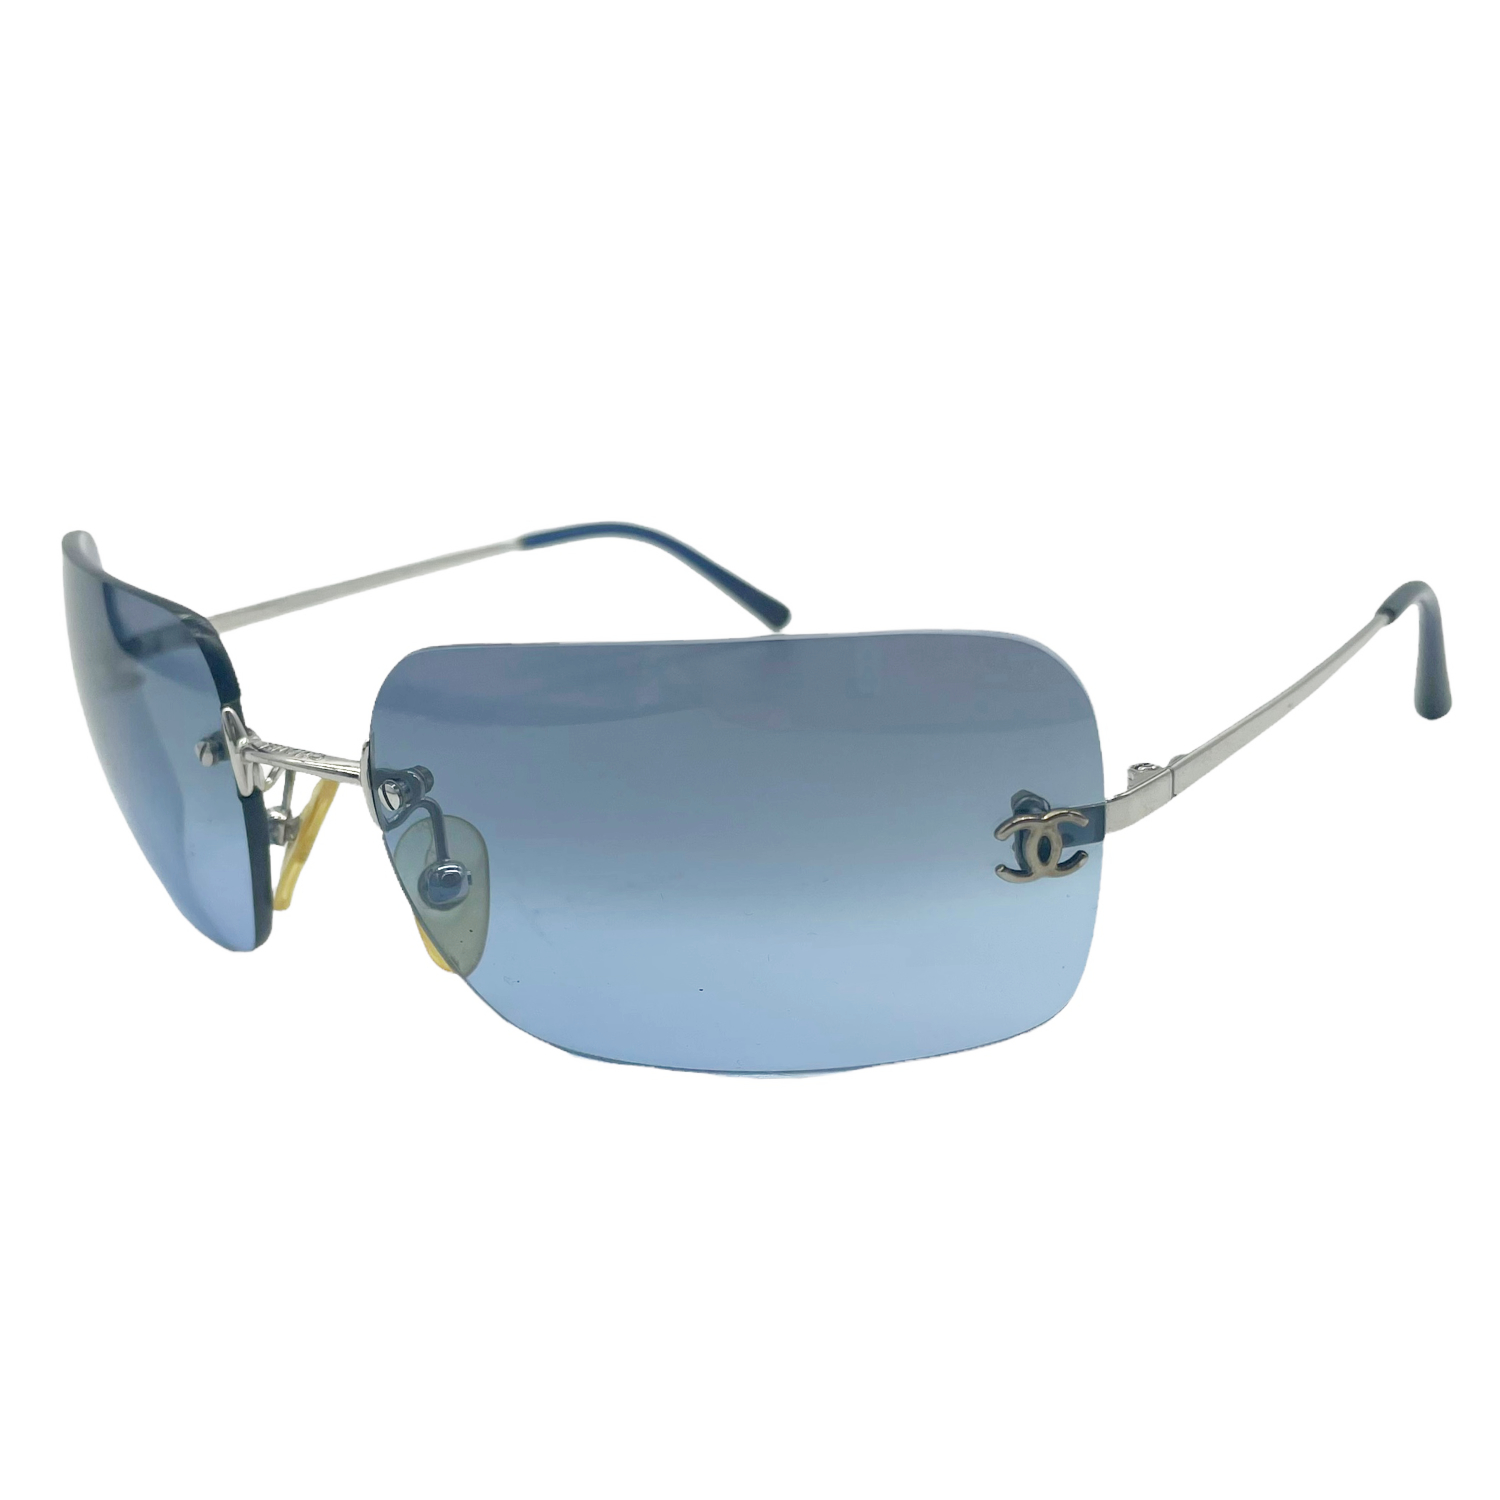 Chanel Rimless Sunglasses in Blue